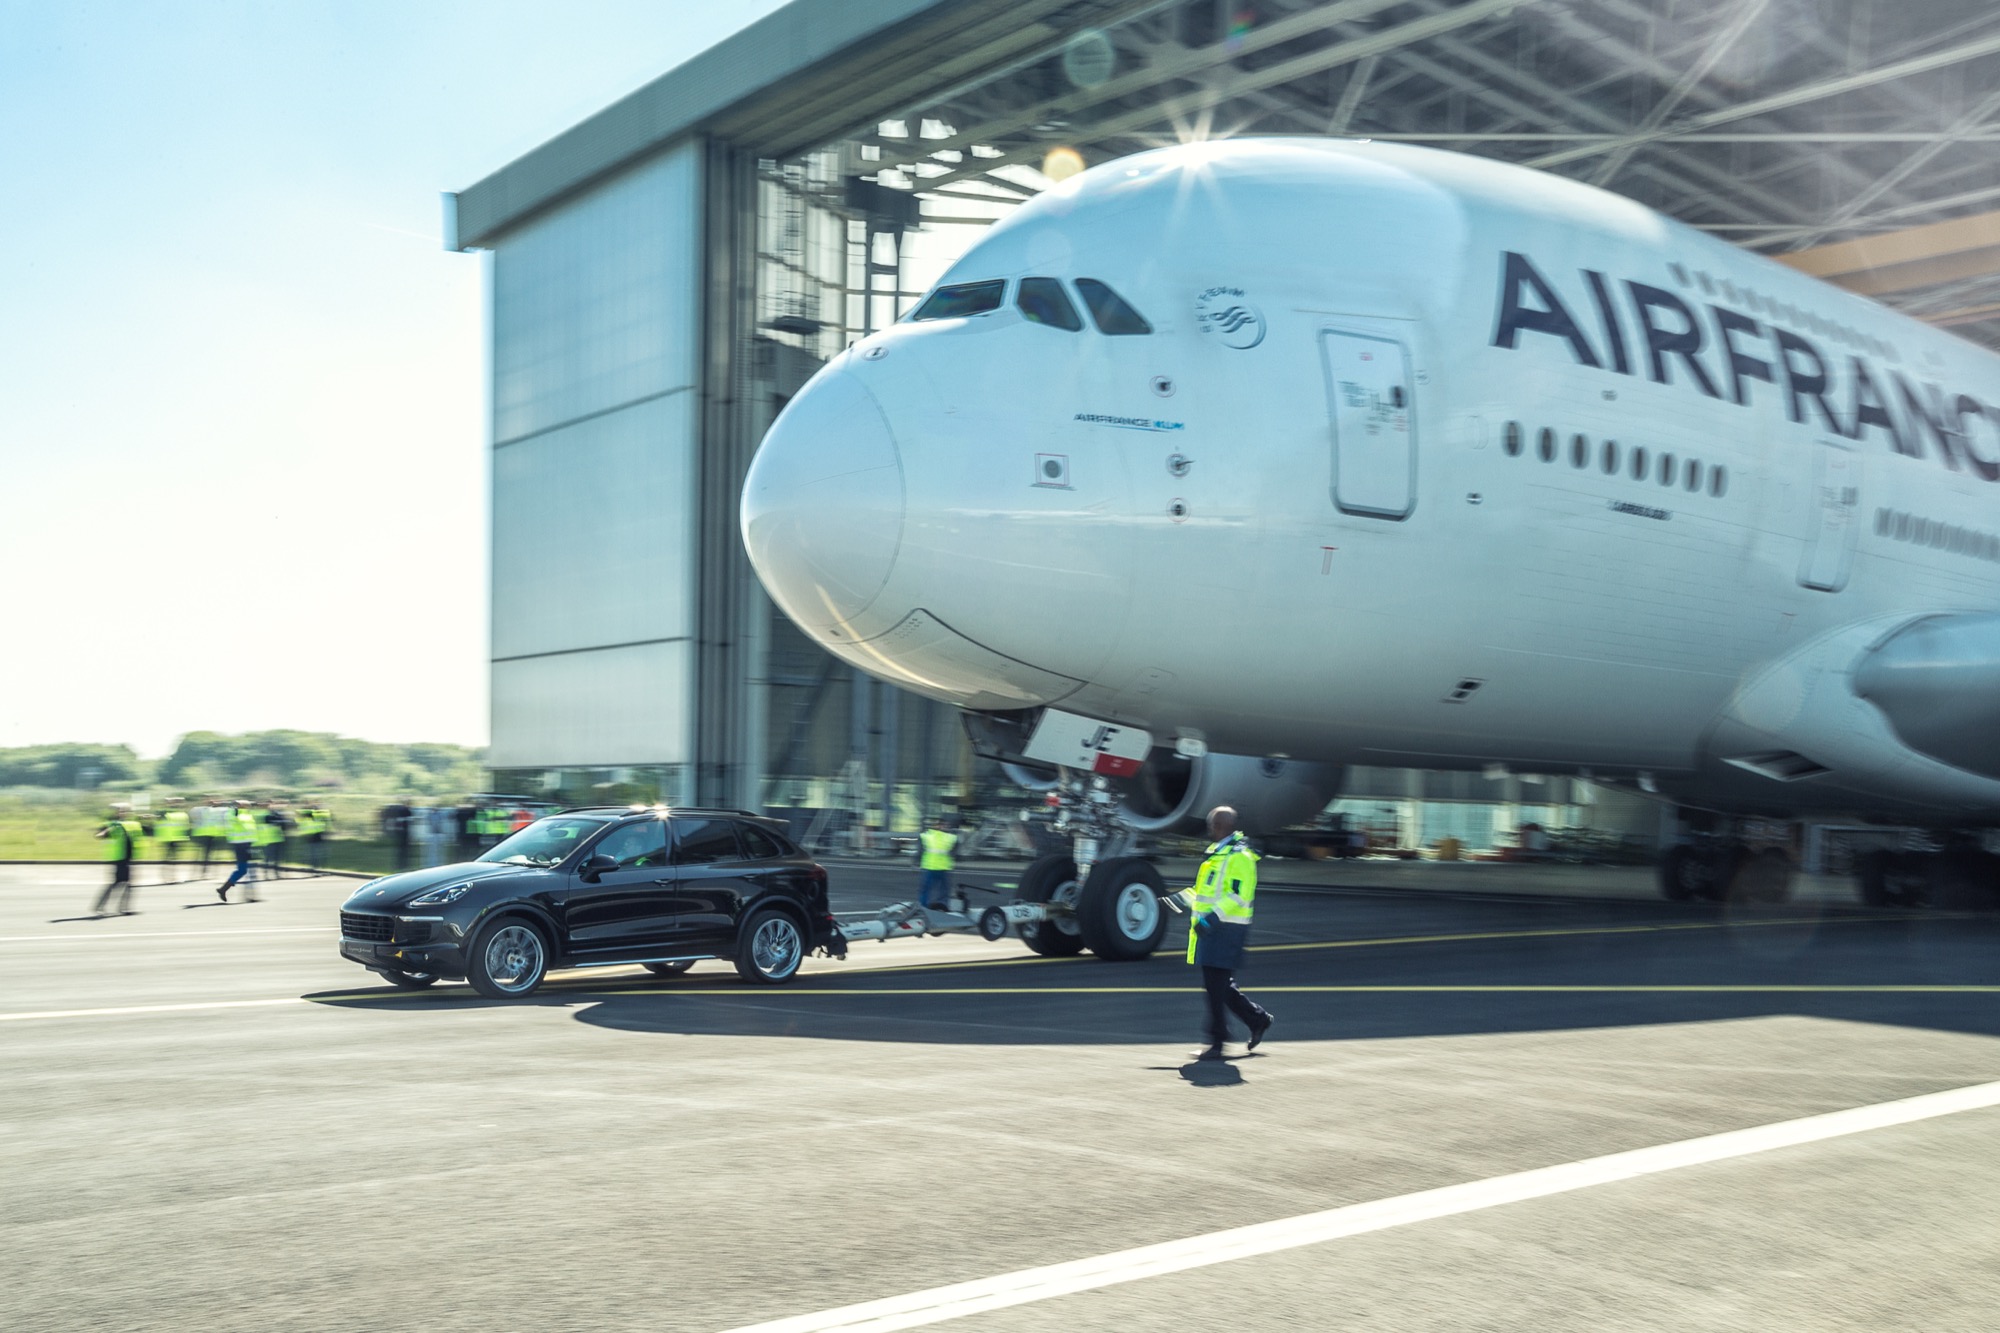 AirFrance - Cayenne A380 - 33